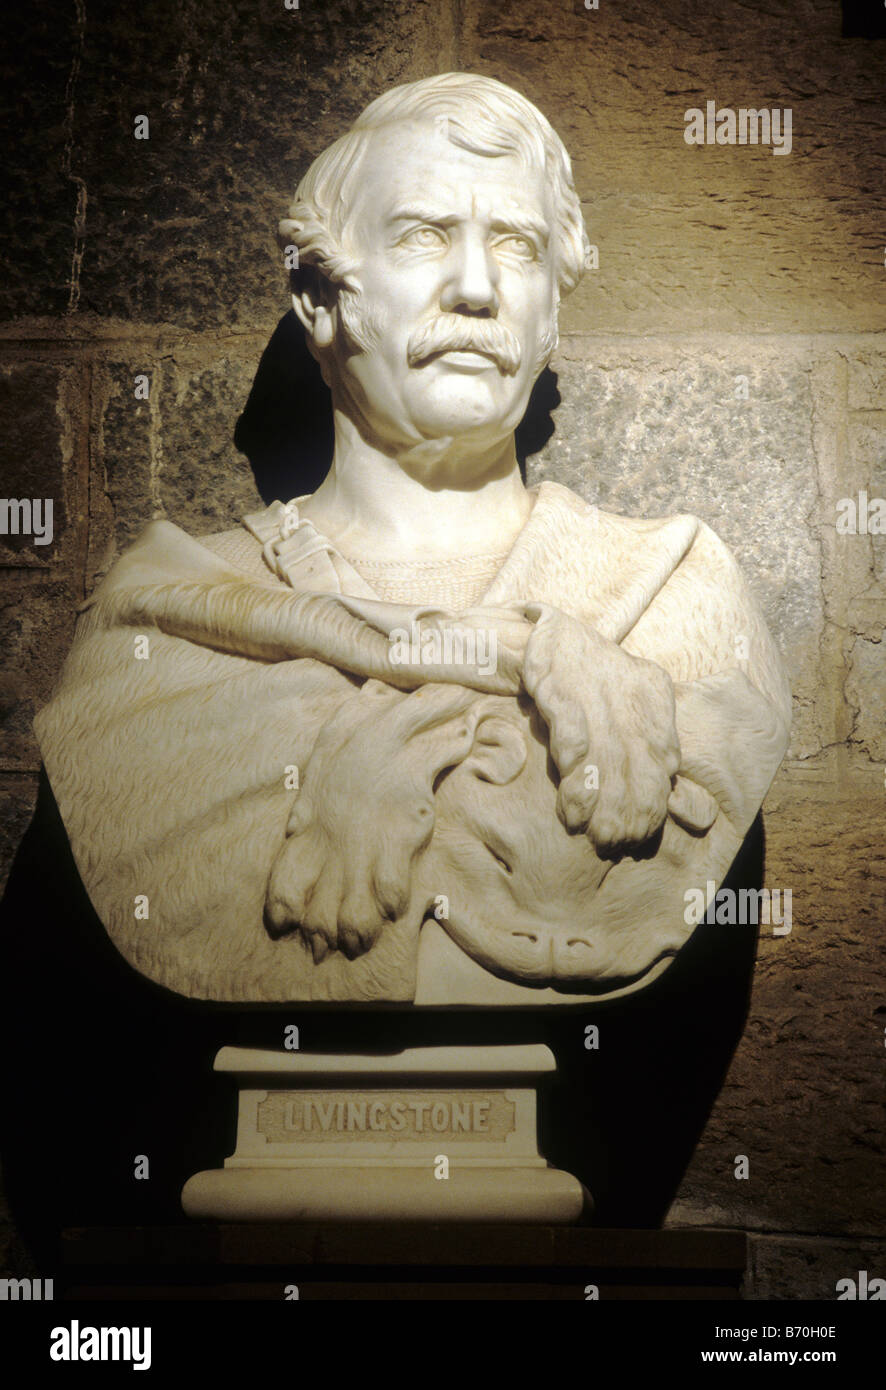 Stirling Scotland Wallace Monument Hall of Fame bust of Dr Livingstone Scottish explorer UK marble effigy portrait Stock Photo